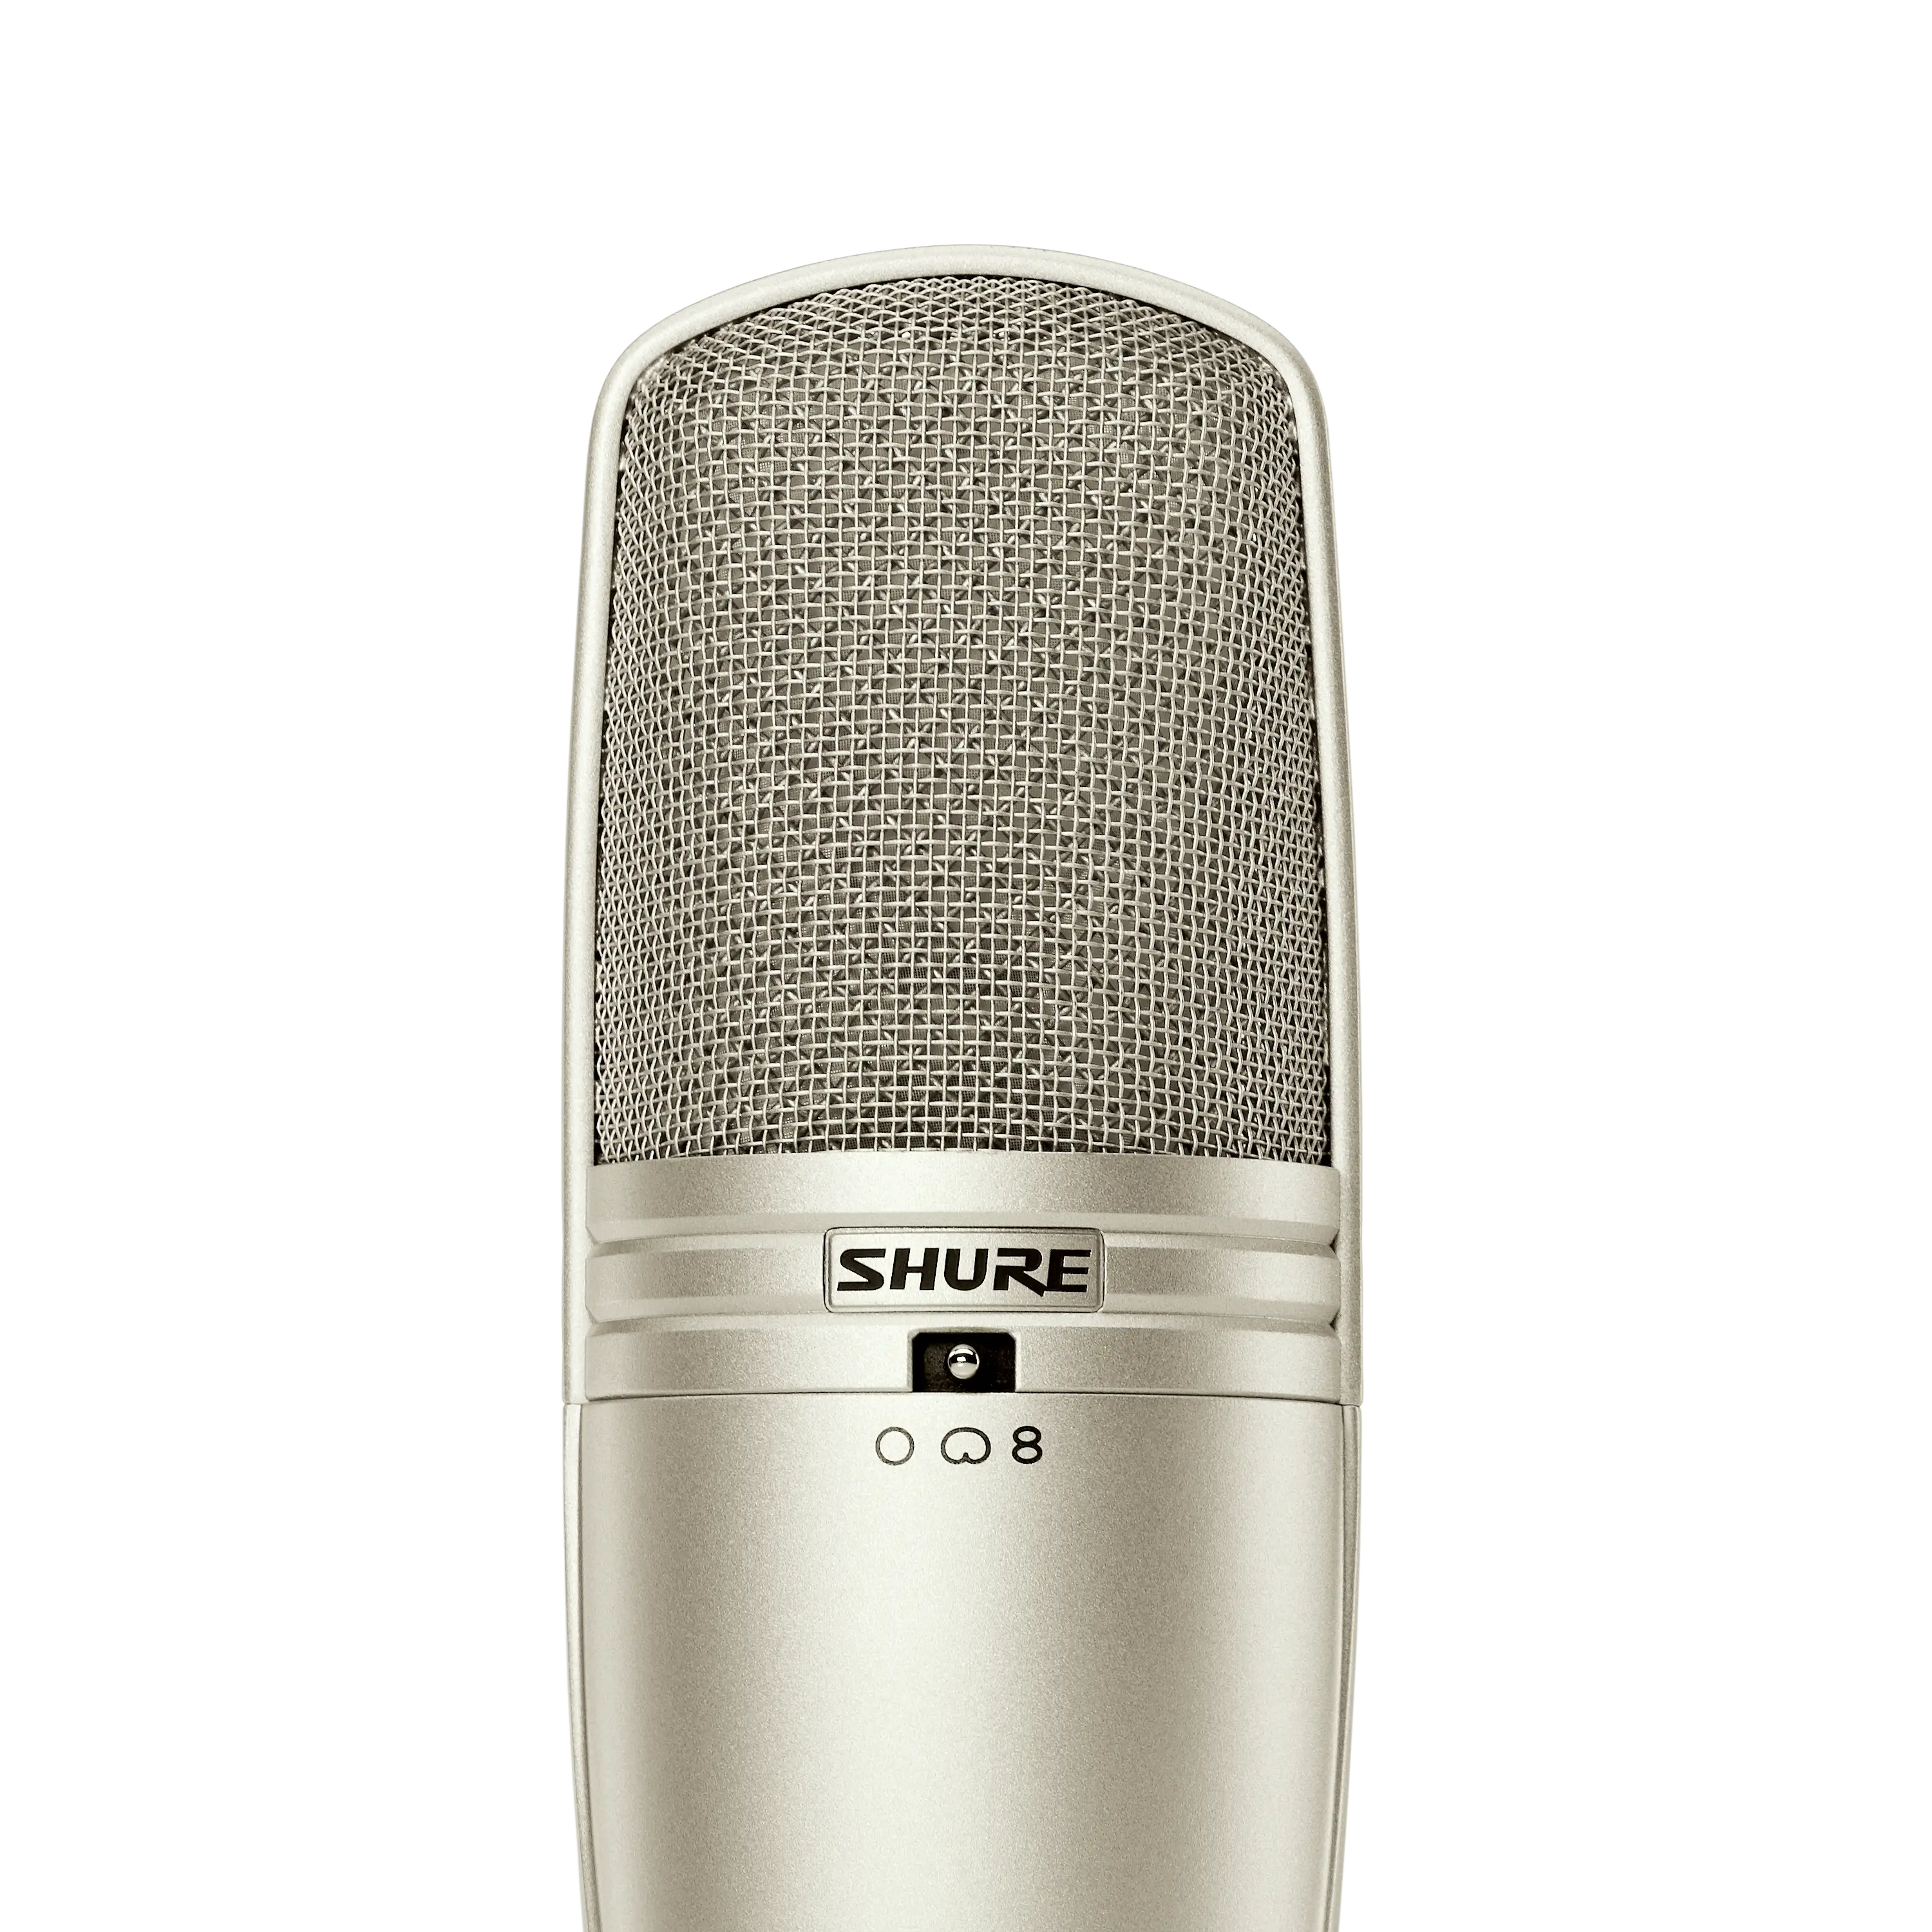 Shure KSM44A Large Diaphragm Multi-Pattern Condenser Microphone